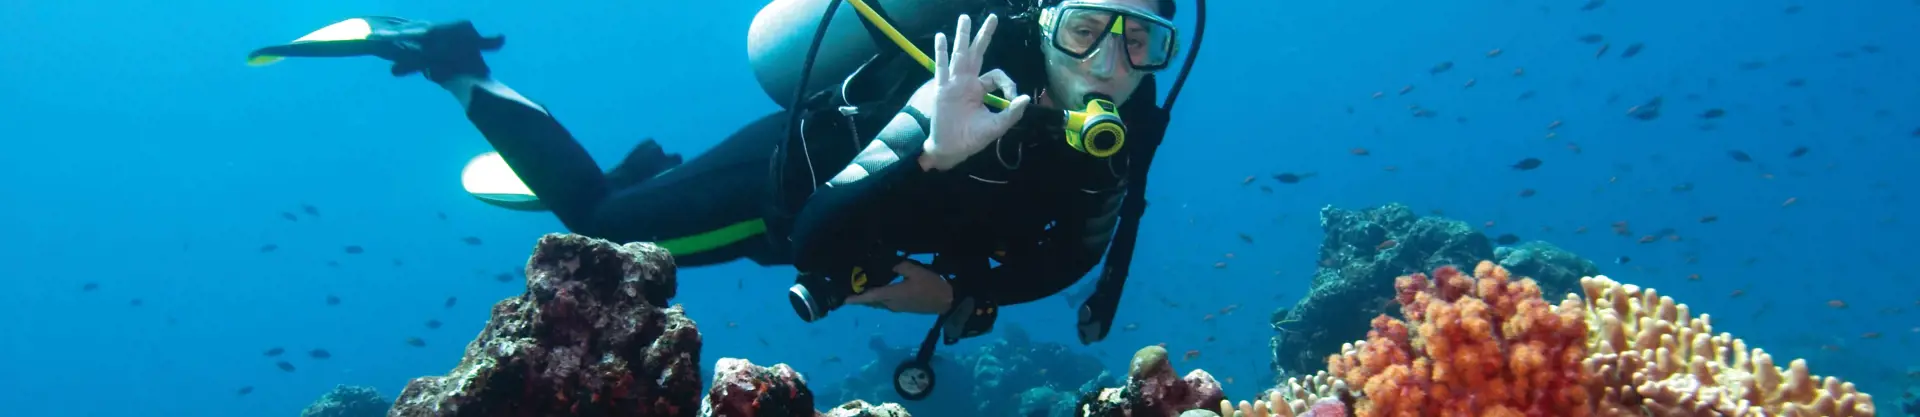 Scuba diver on reef